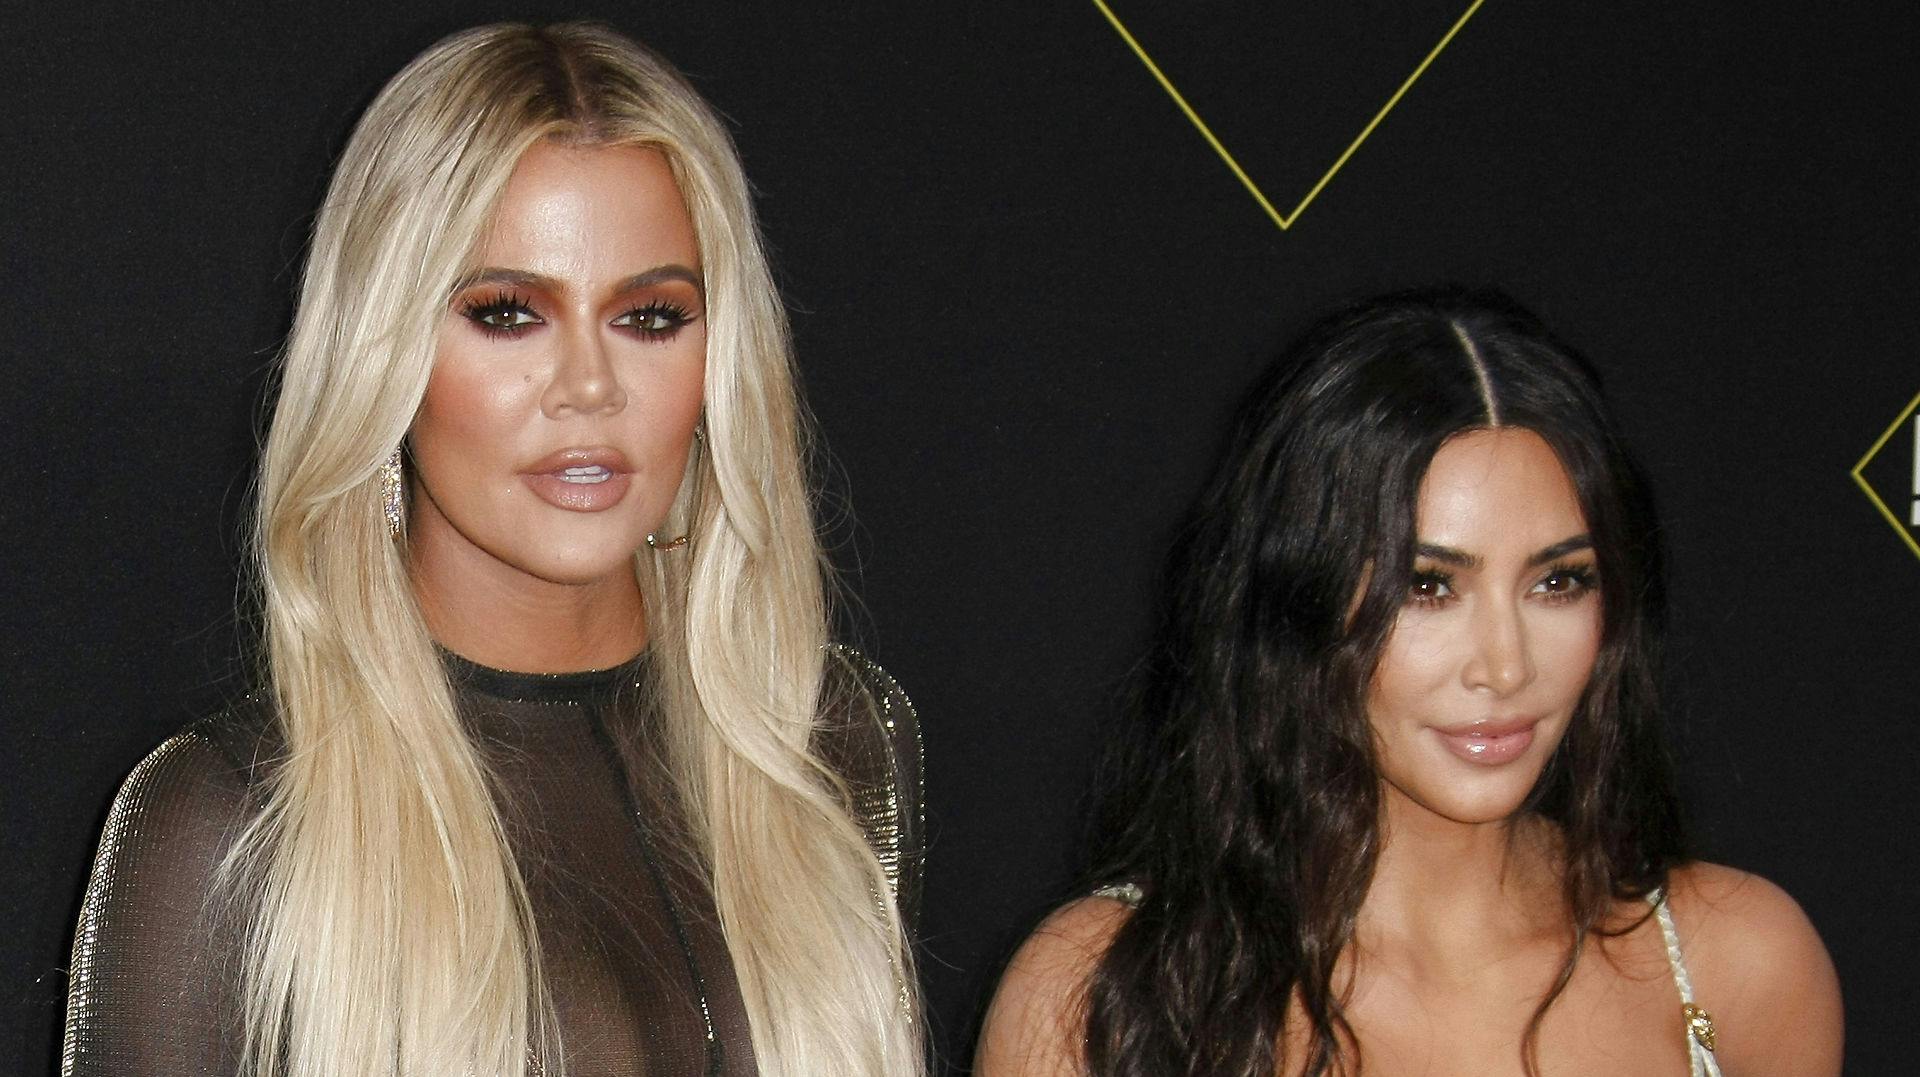 Khloe Kardashian ses her med sin søster, Kim Kardashian West.